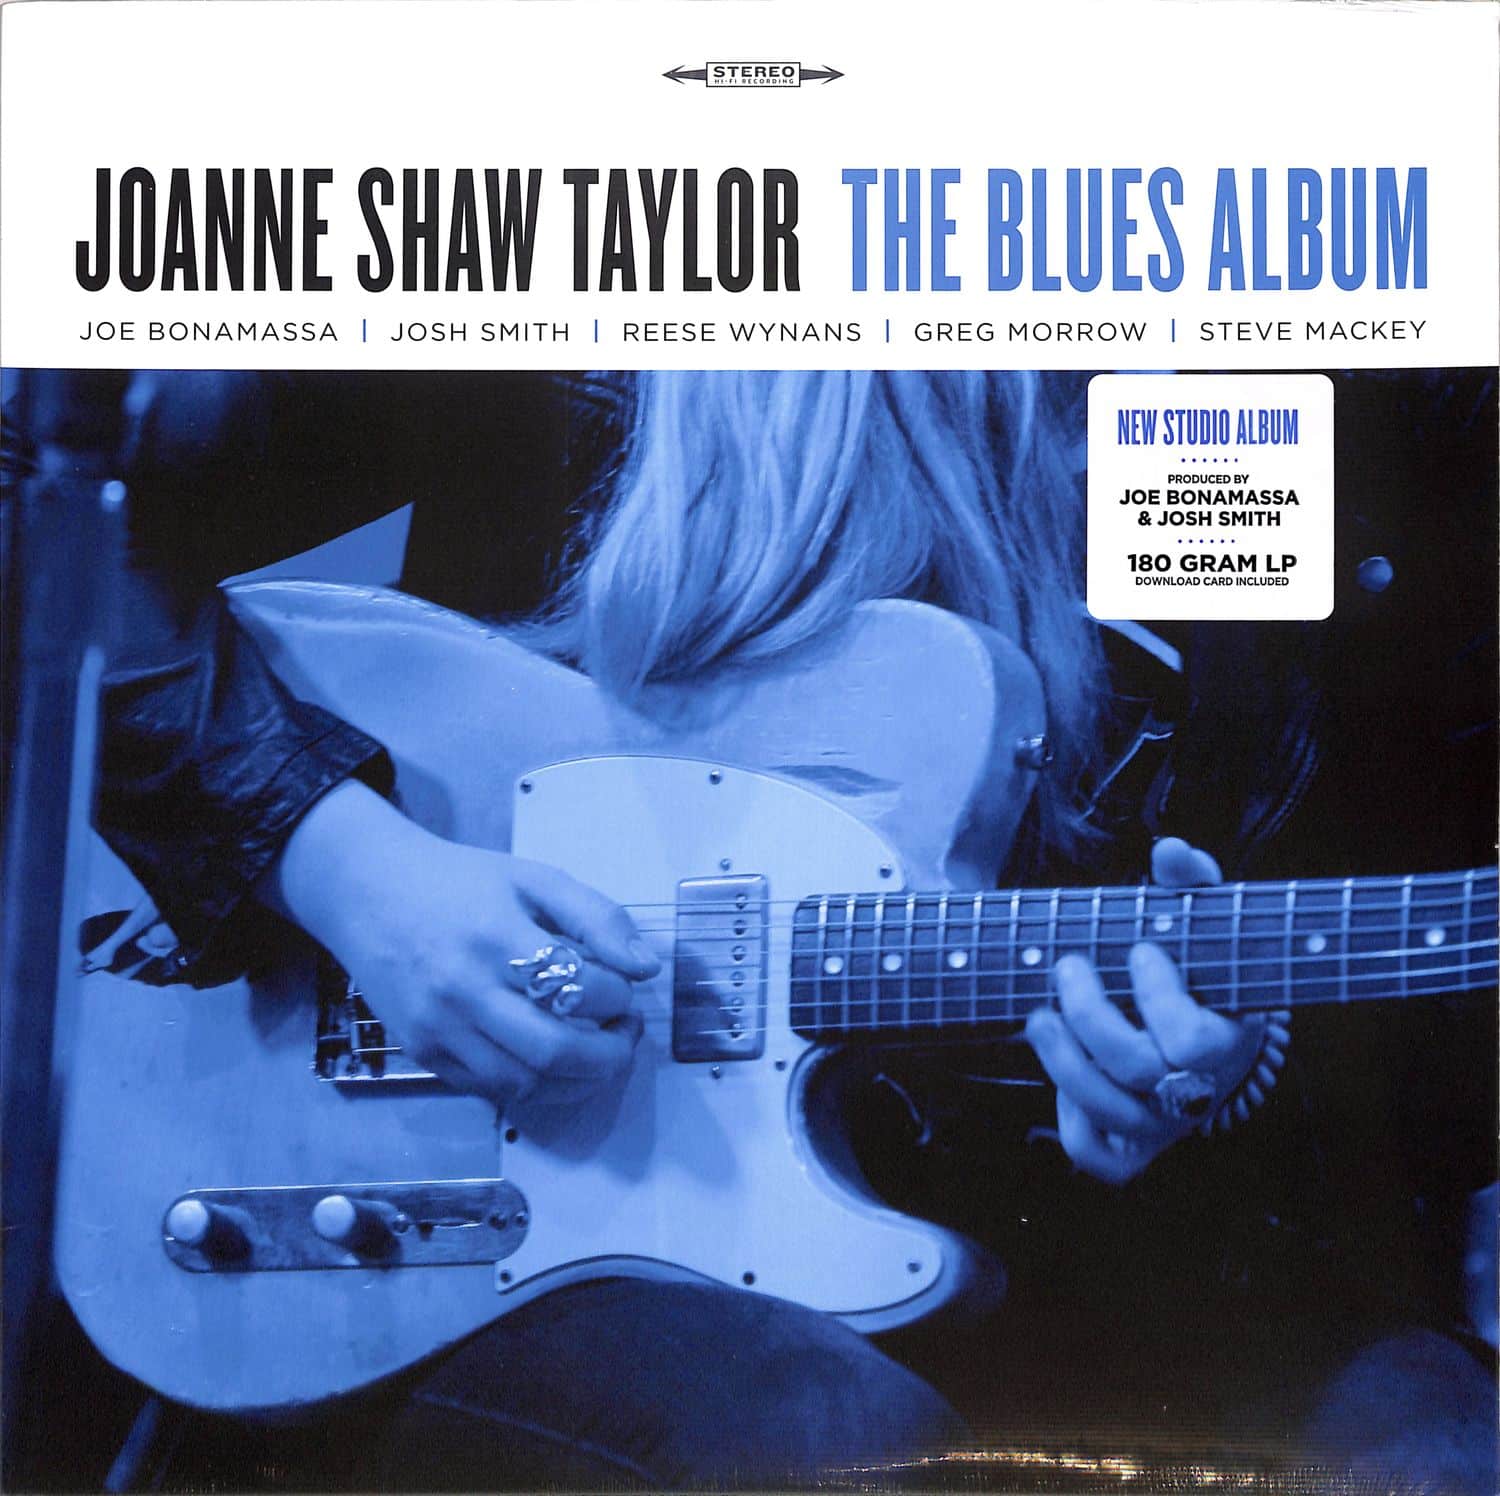 Joanne Shaw Taylor - THE BLUES ALBUM 